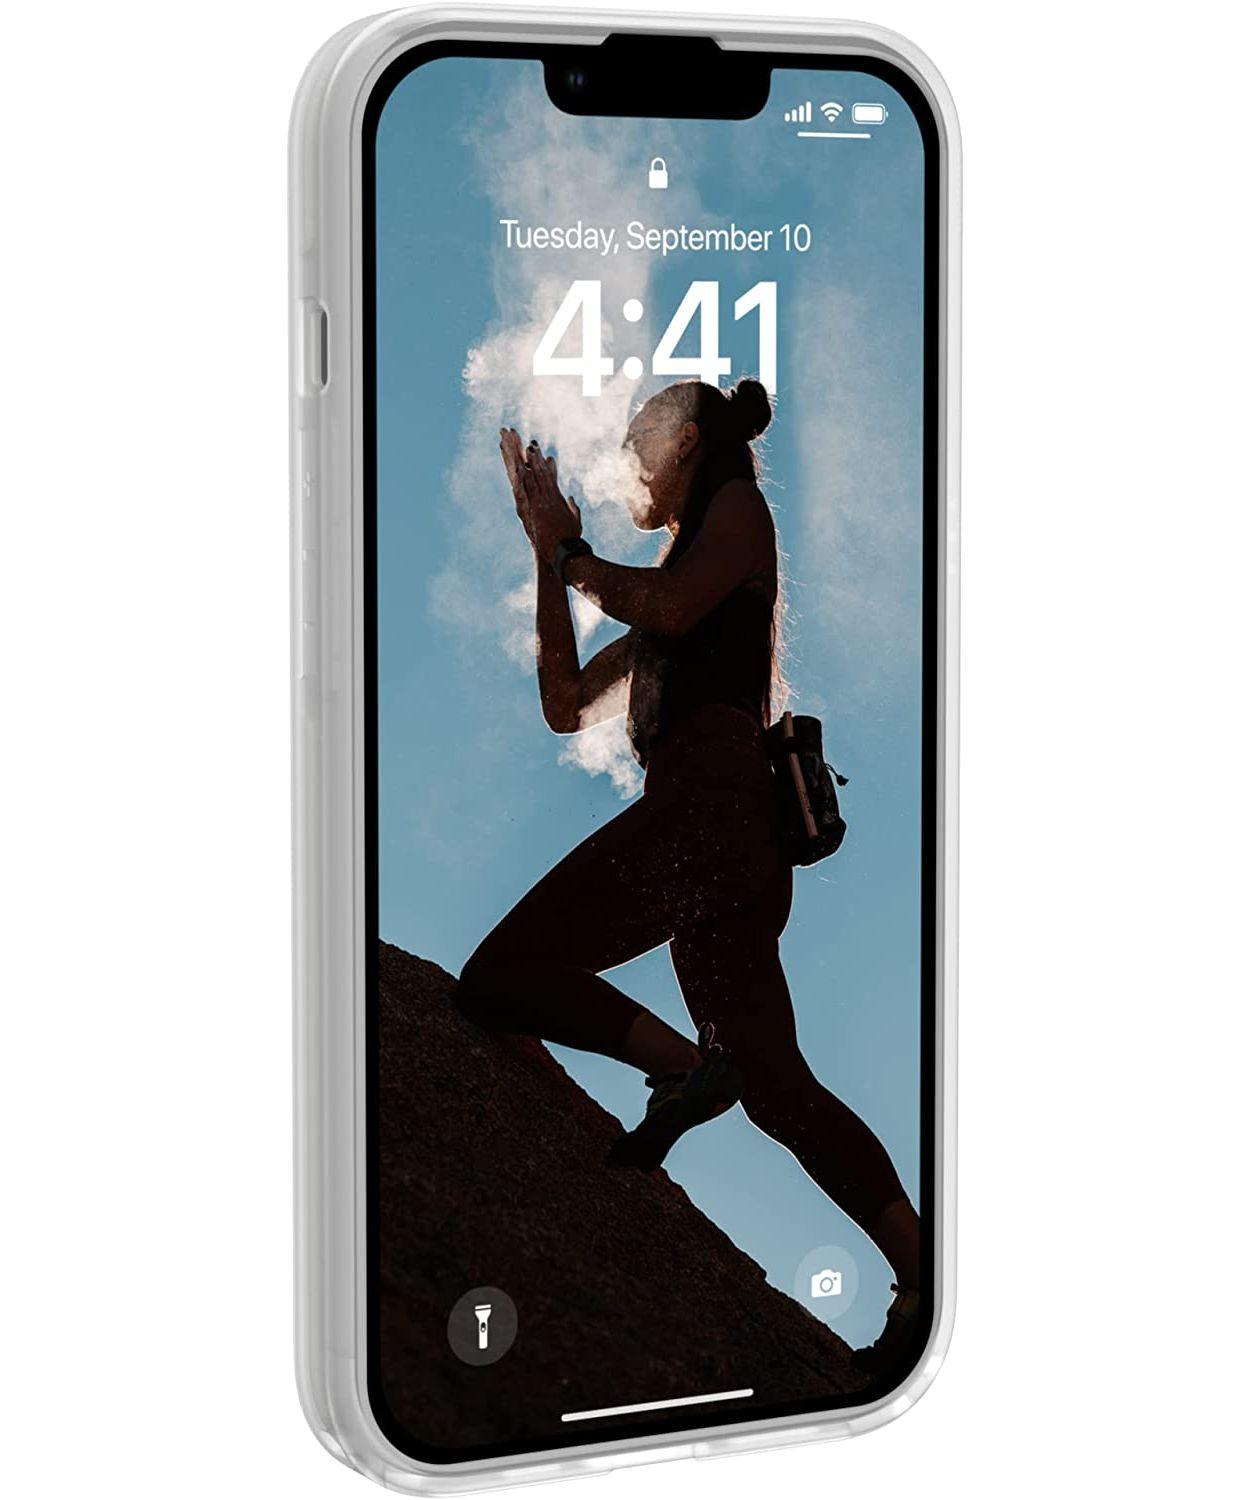 14 [U] iPhone Backcover, marshmallow Lucent (transparent) UAG MagSafe, by ARMOR URBAN Plus, U Apple, GEAR 2.0